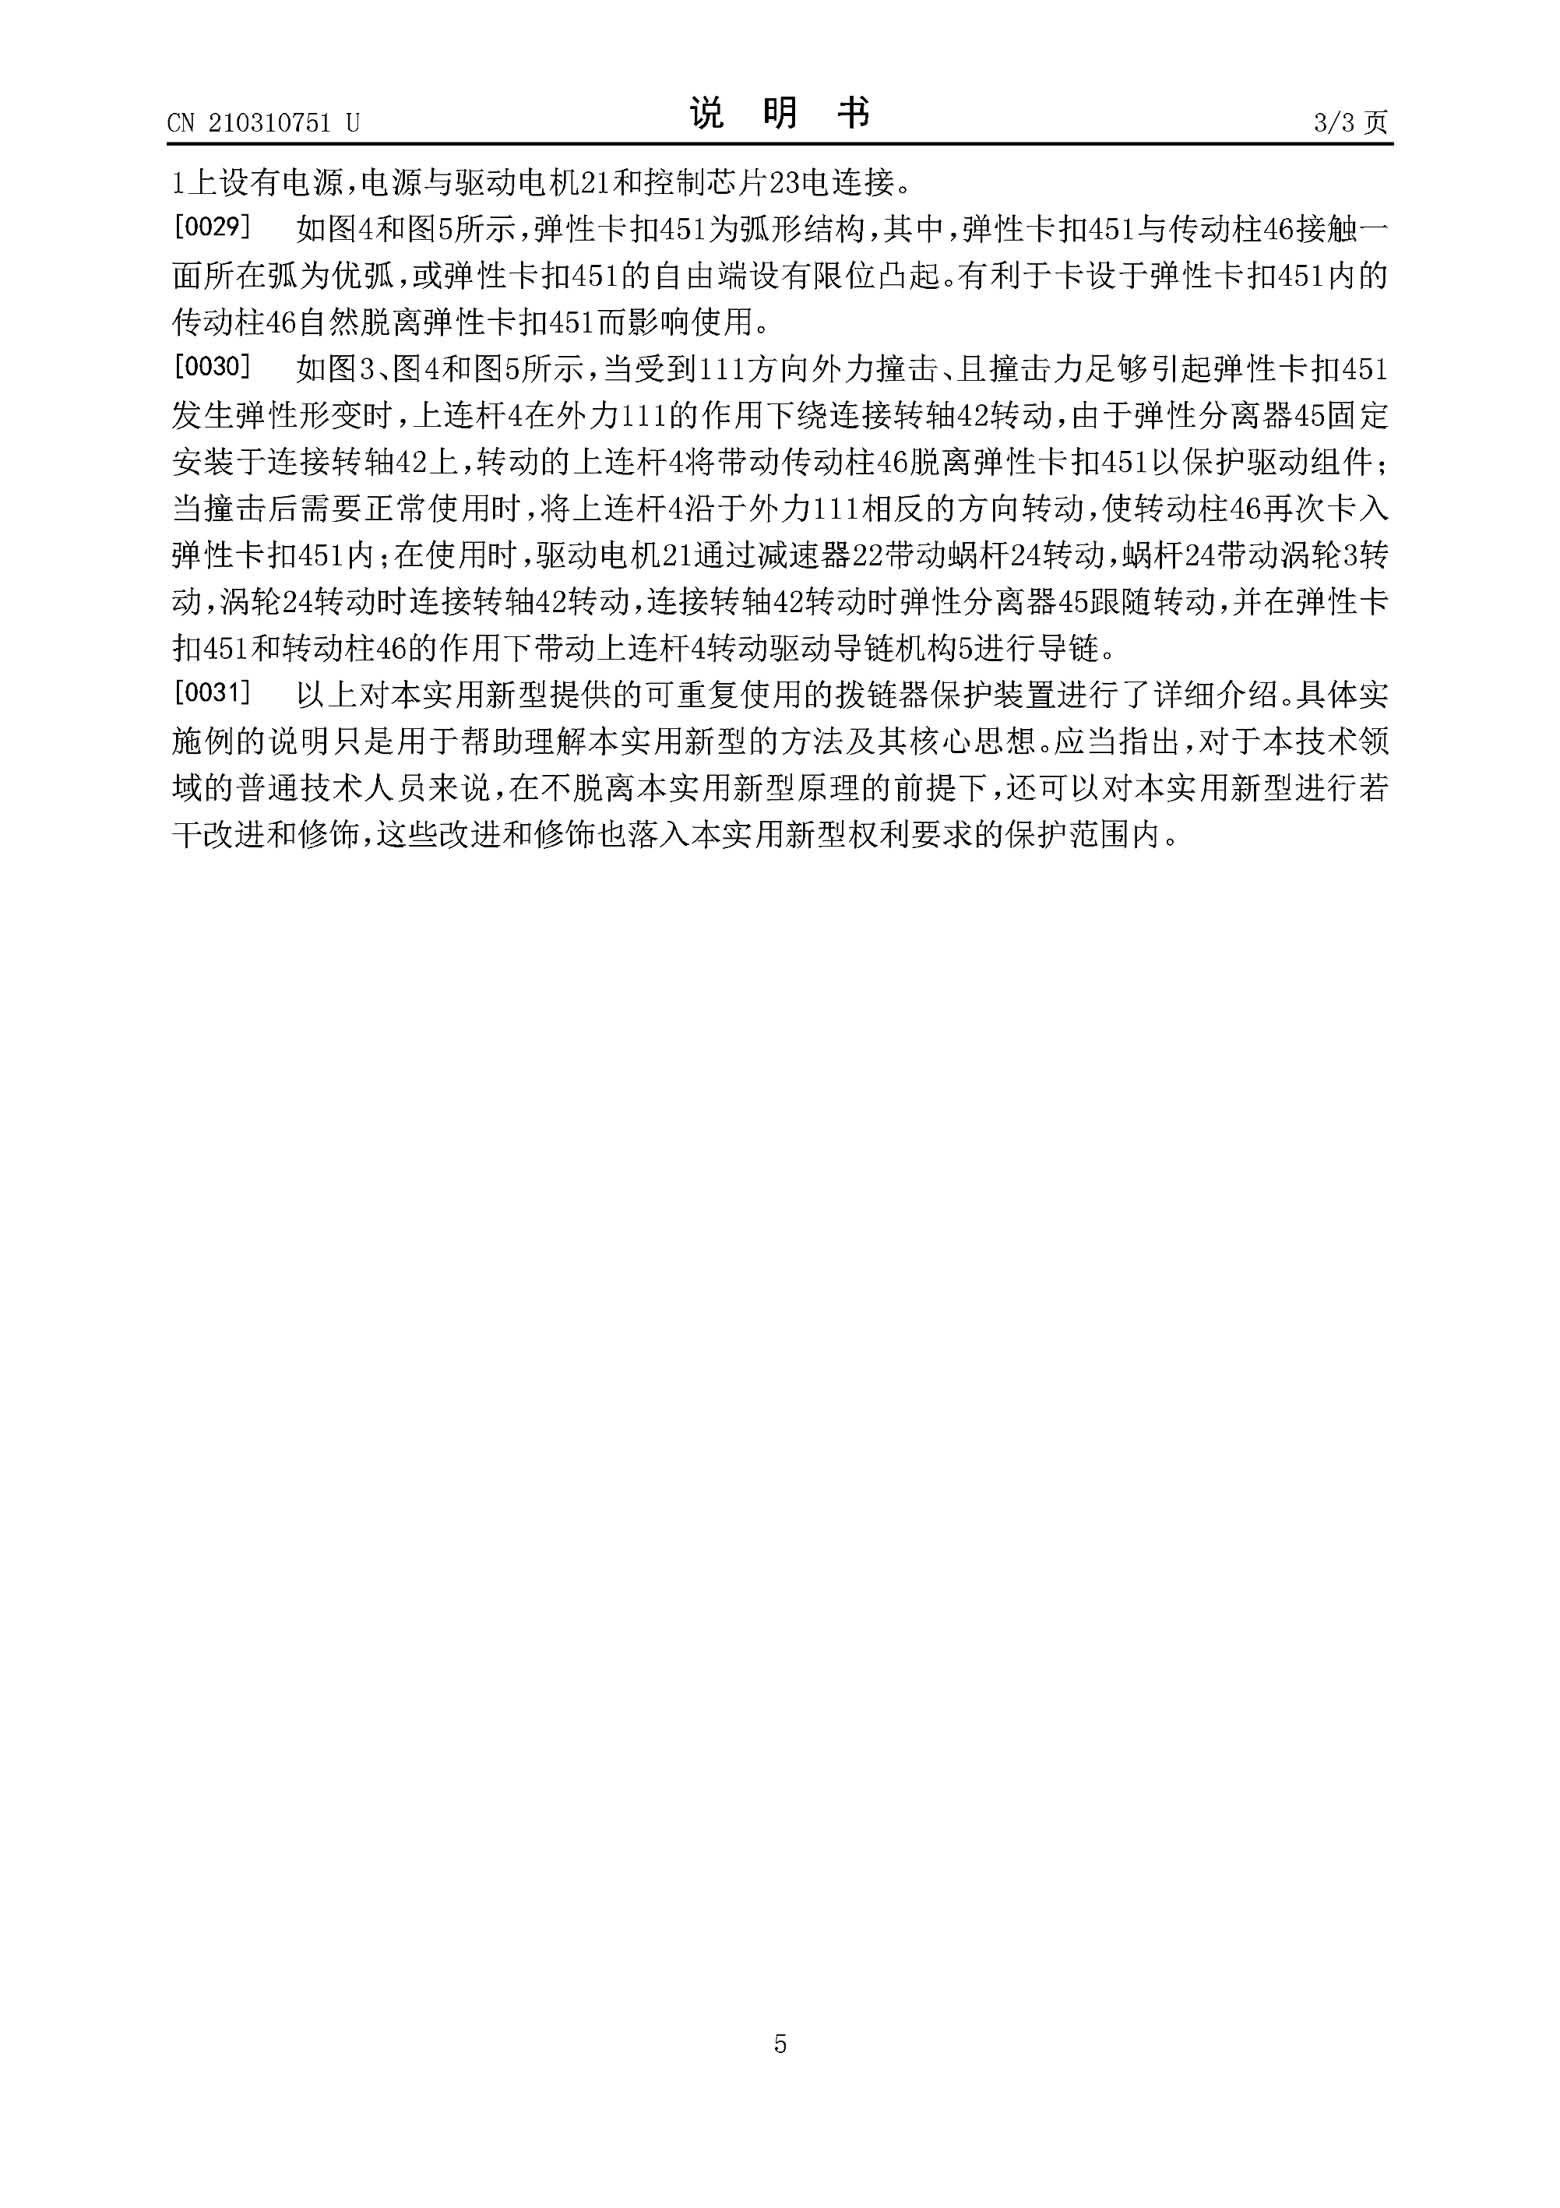 Chinese Utility Model # CN210310751U - Wheel Top page 05 main image